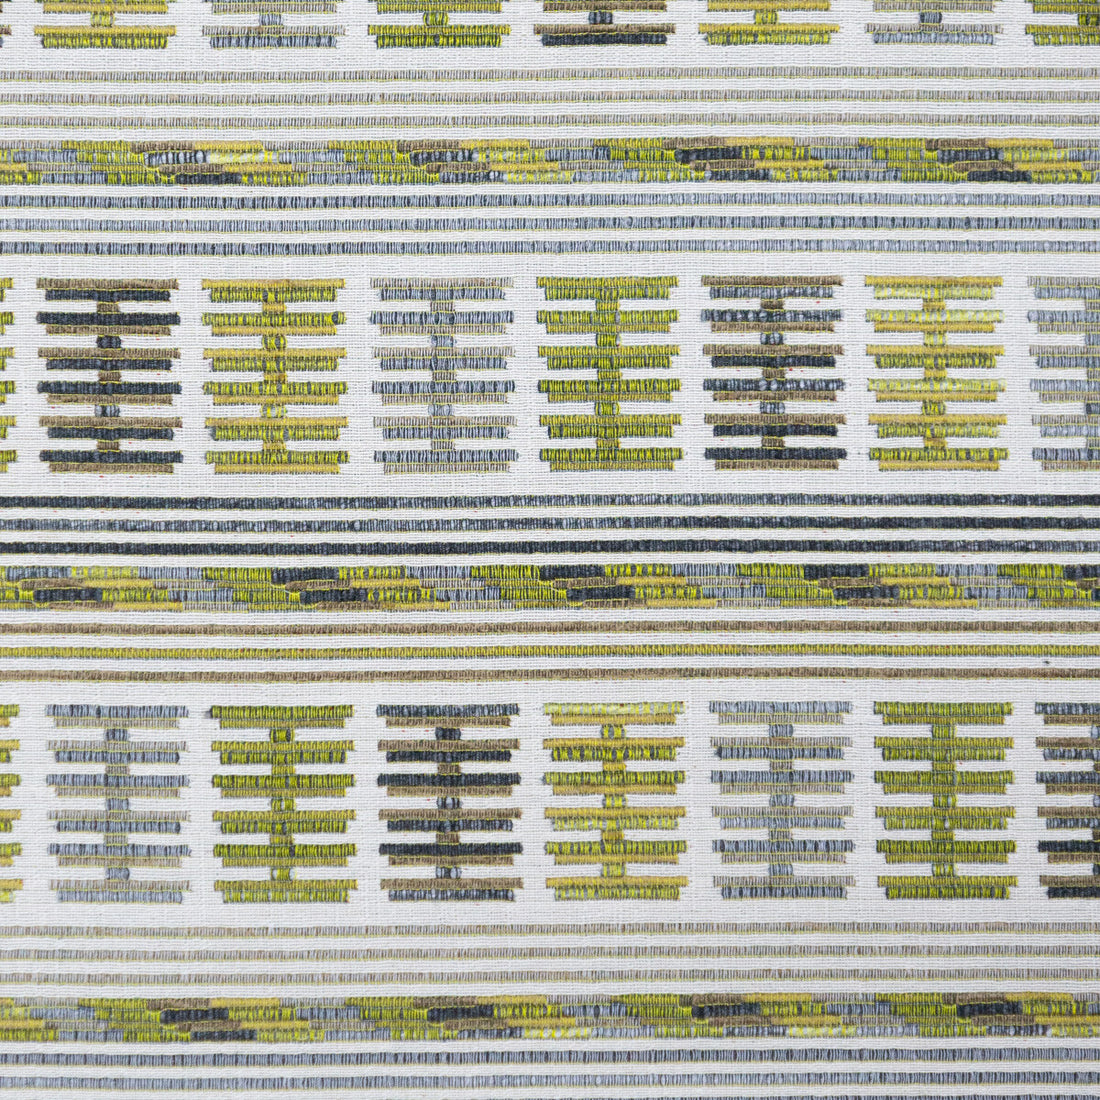 Toro Sentado fabric in lima color - pattern GDT5657.001.0 - by Gaston y Daniela in the Gaston Rio Grande collection